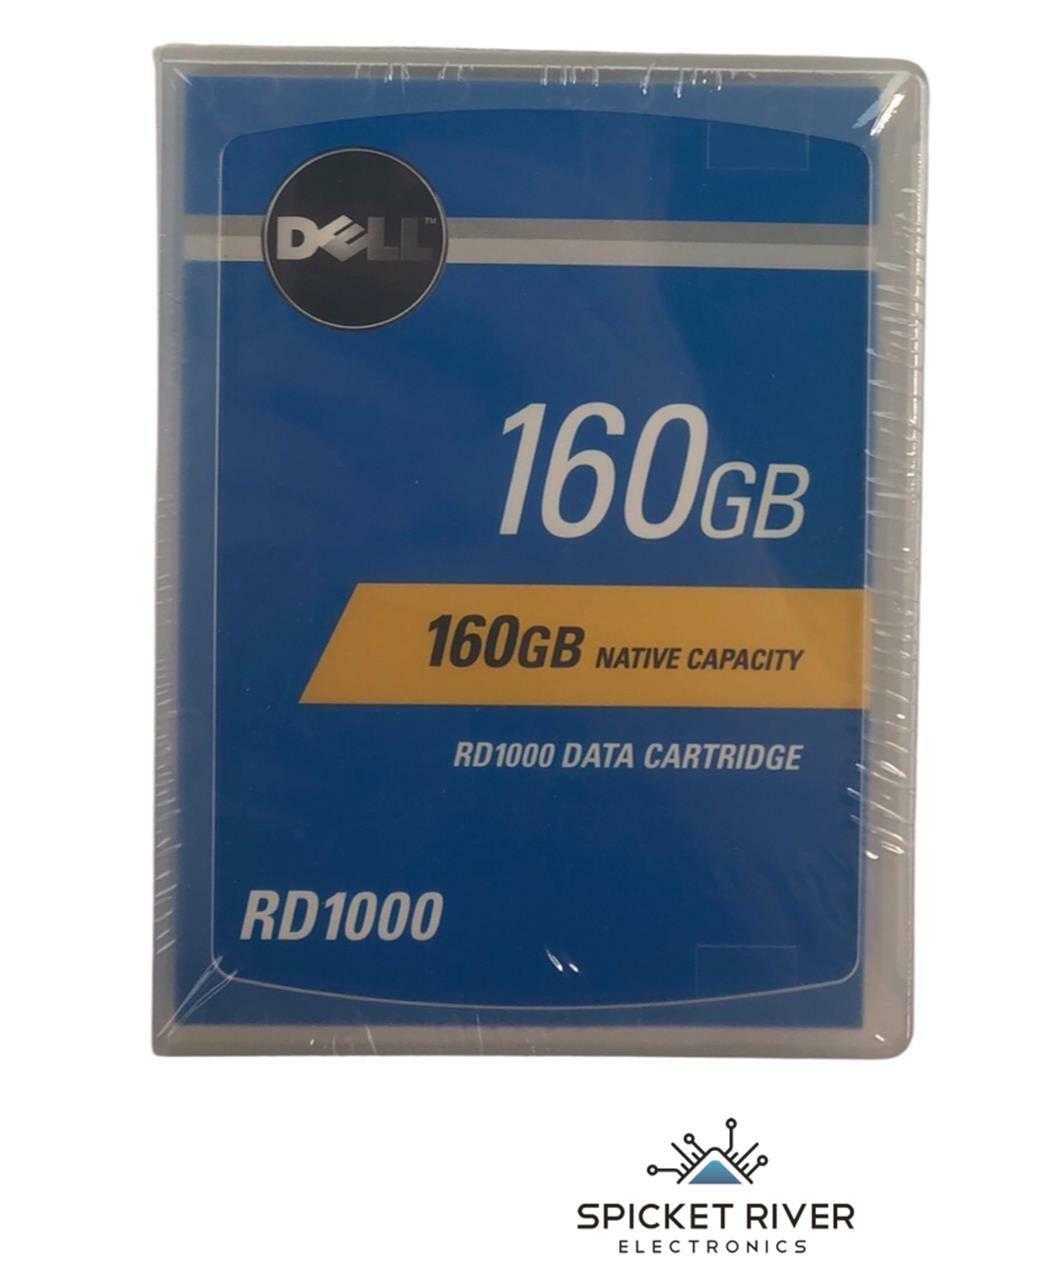 NEW - Open Box - Dell RD1000 160GB Native Capacity Data Cartridge Drive